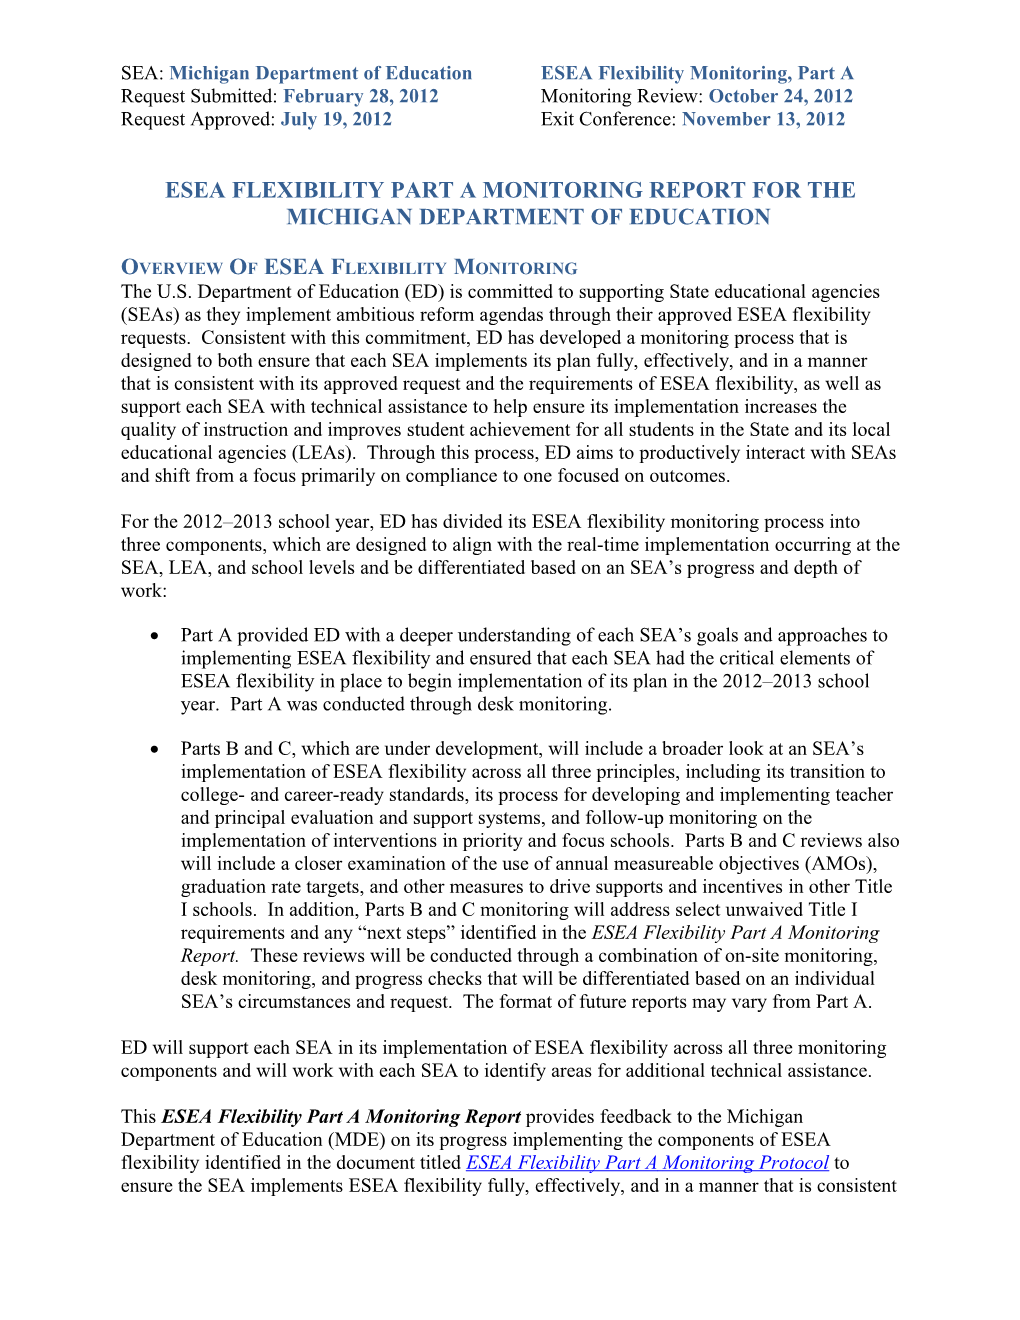 Michigan ESEA Flexibility Monitoring Part B Report